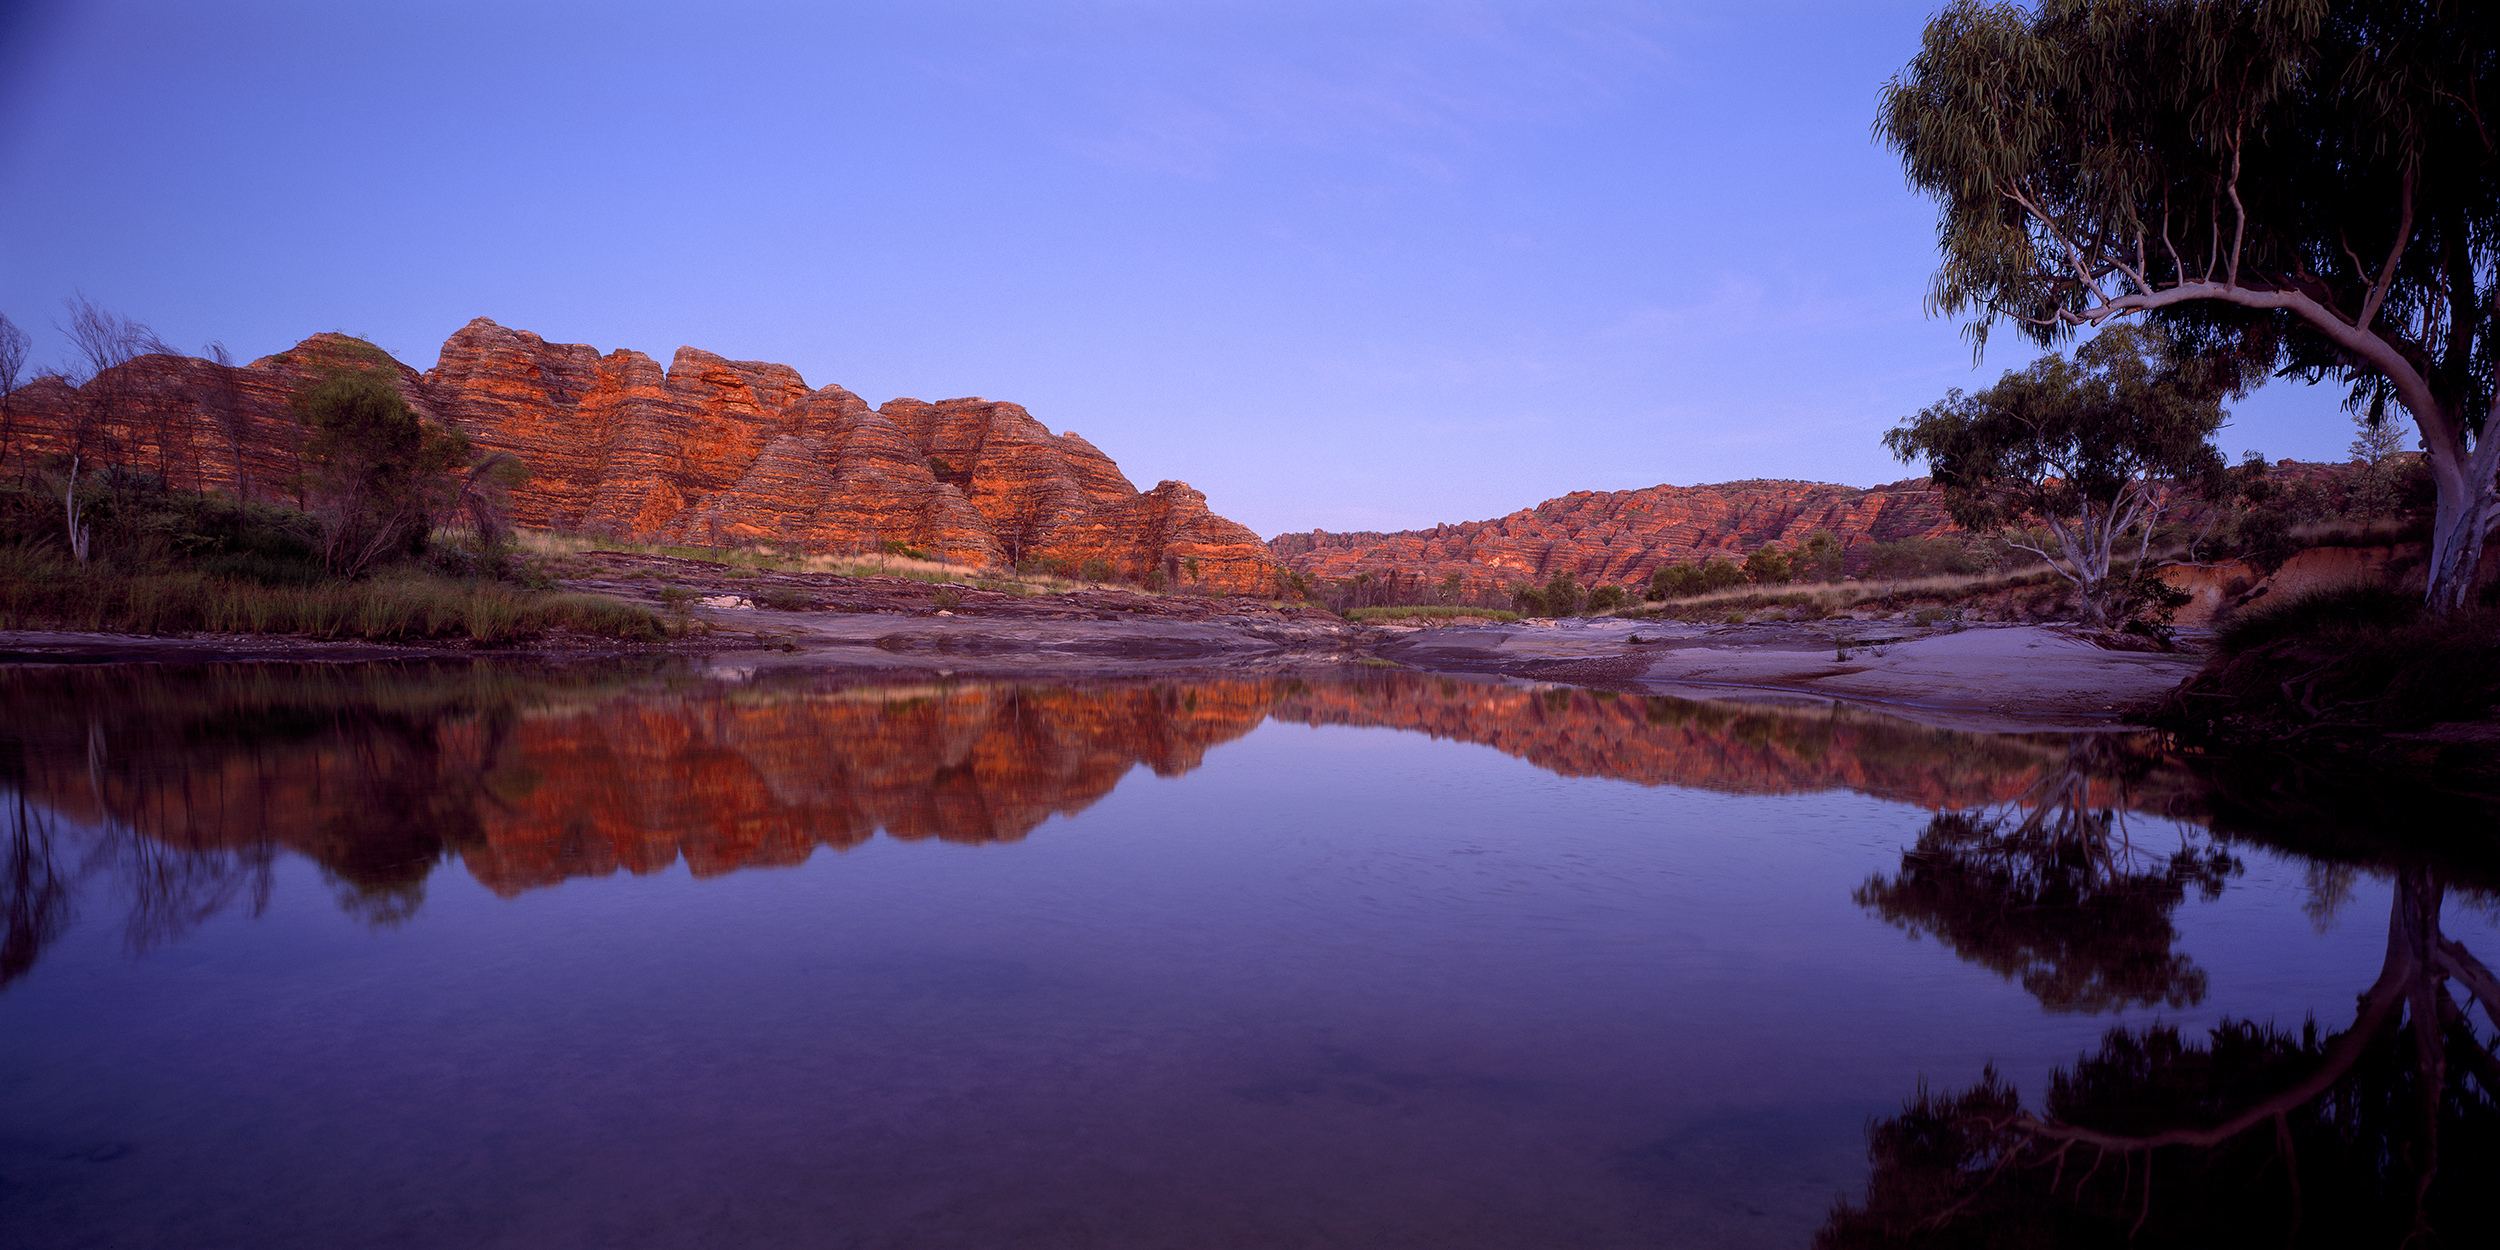  Dawn Reflections, Bungle Bungles, Kimberley, Western Australia, 2008.&nbsp; Edition of 3. 